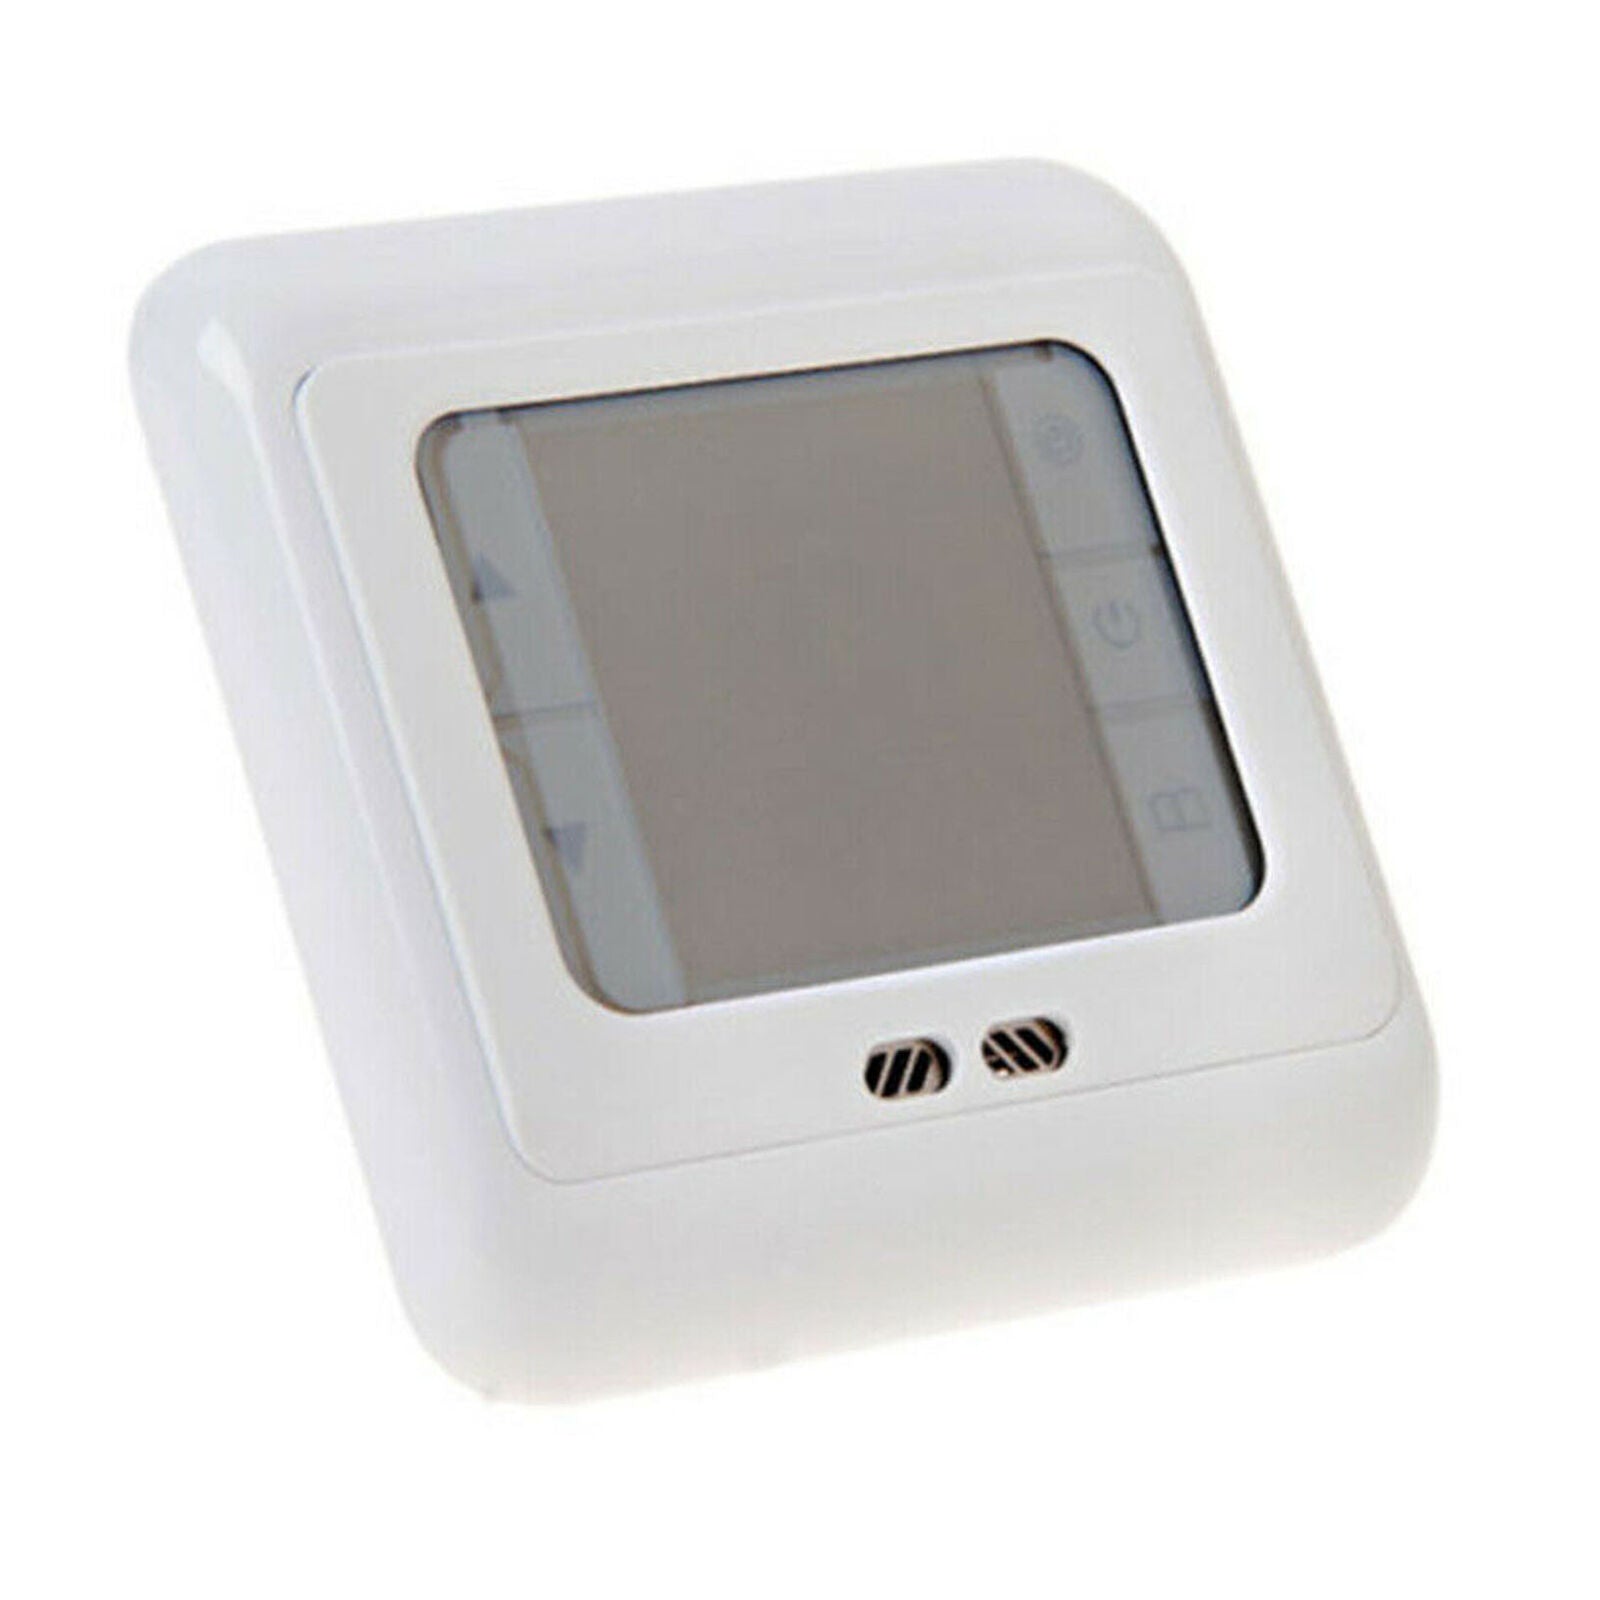 Digital Programmable Room Thermostat For Underfloor Heating Mat/Heating Panel